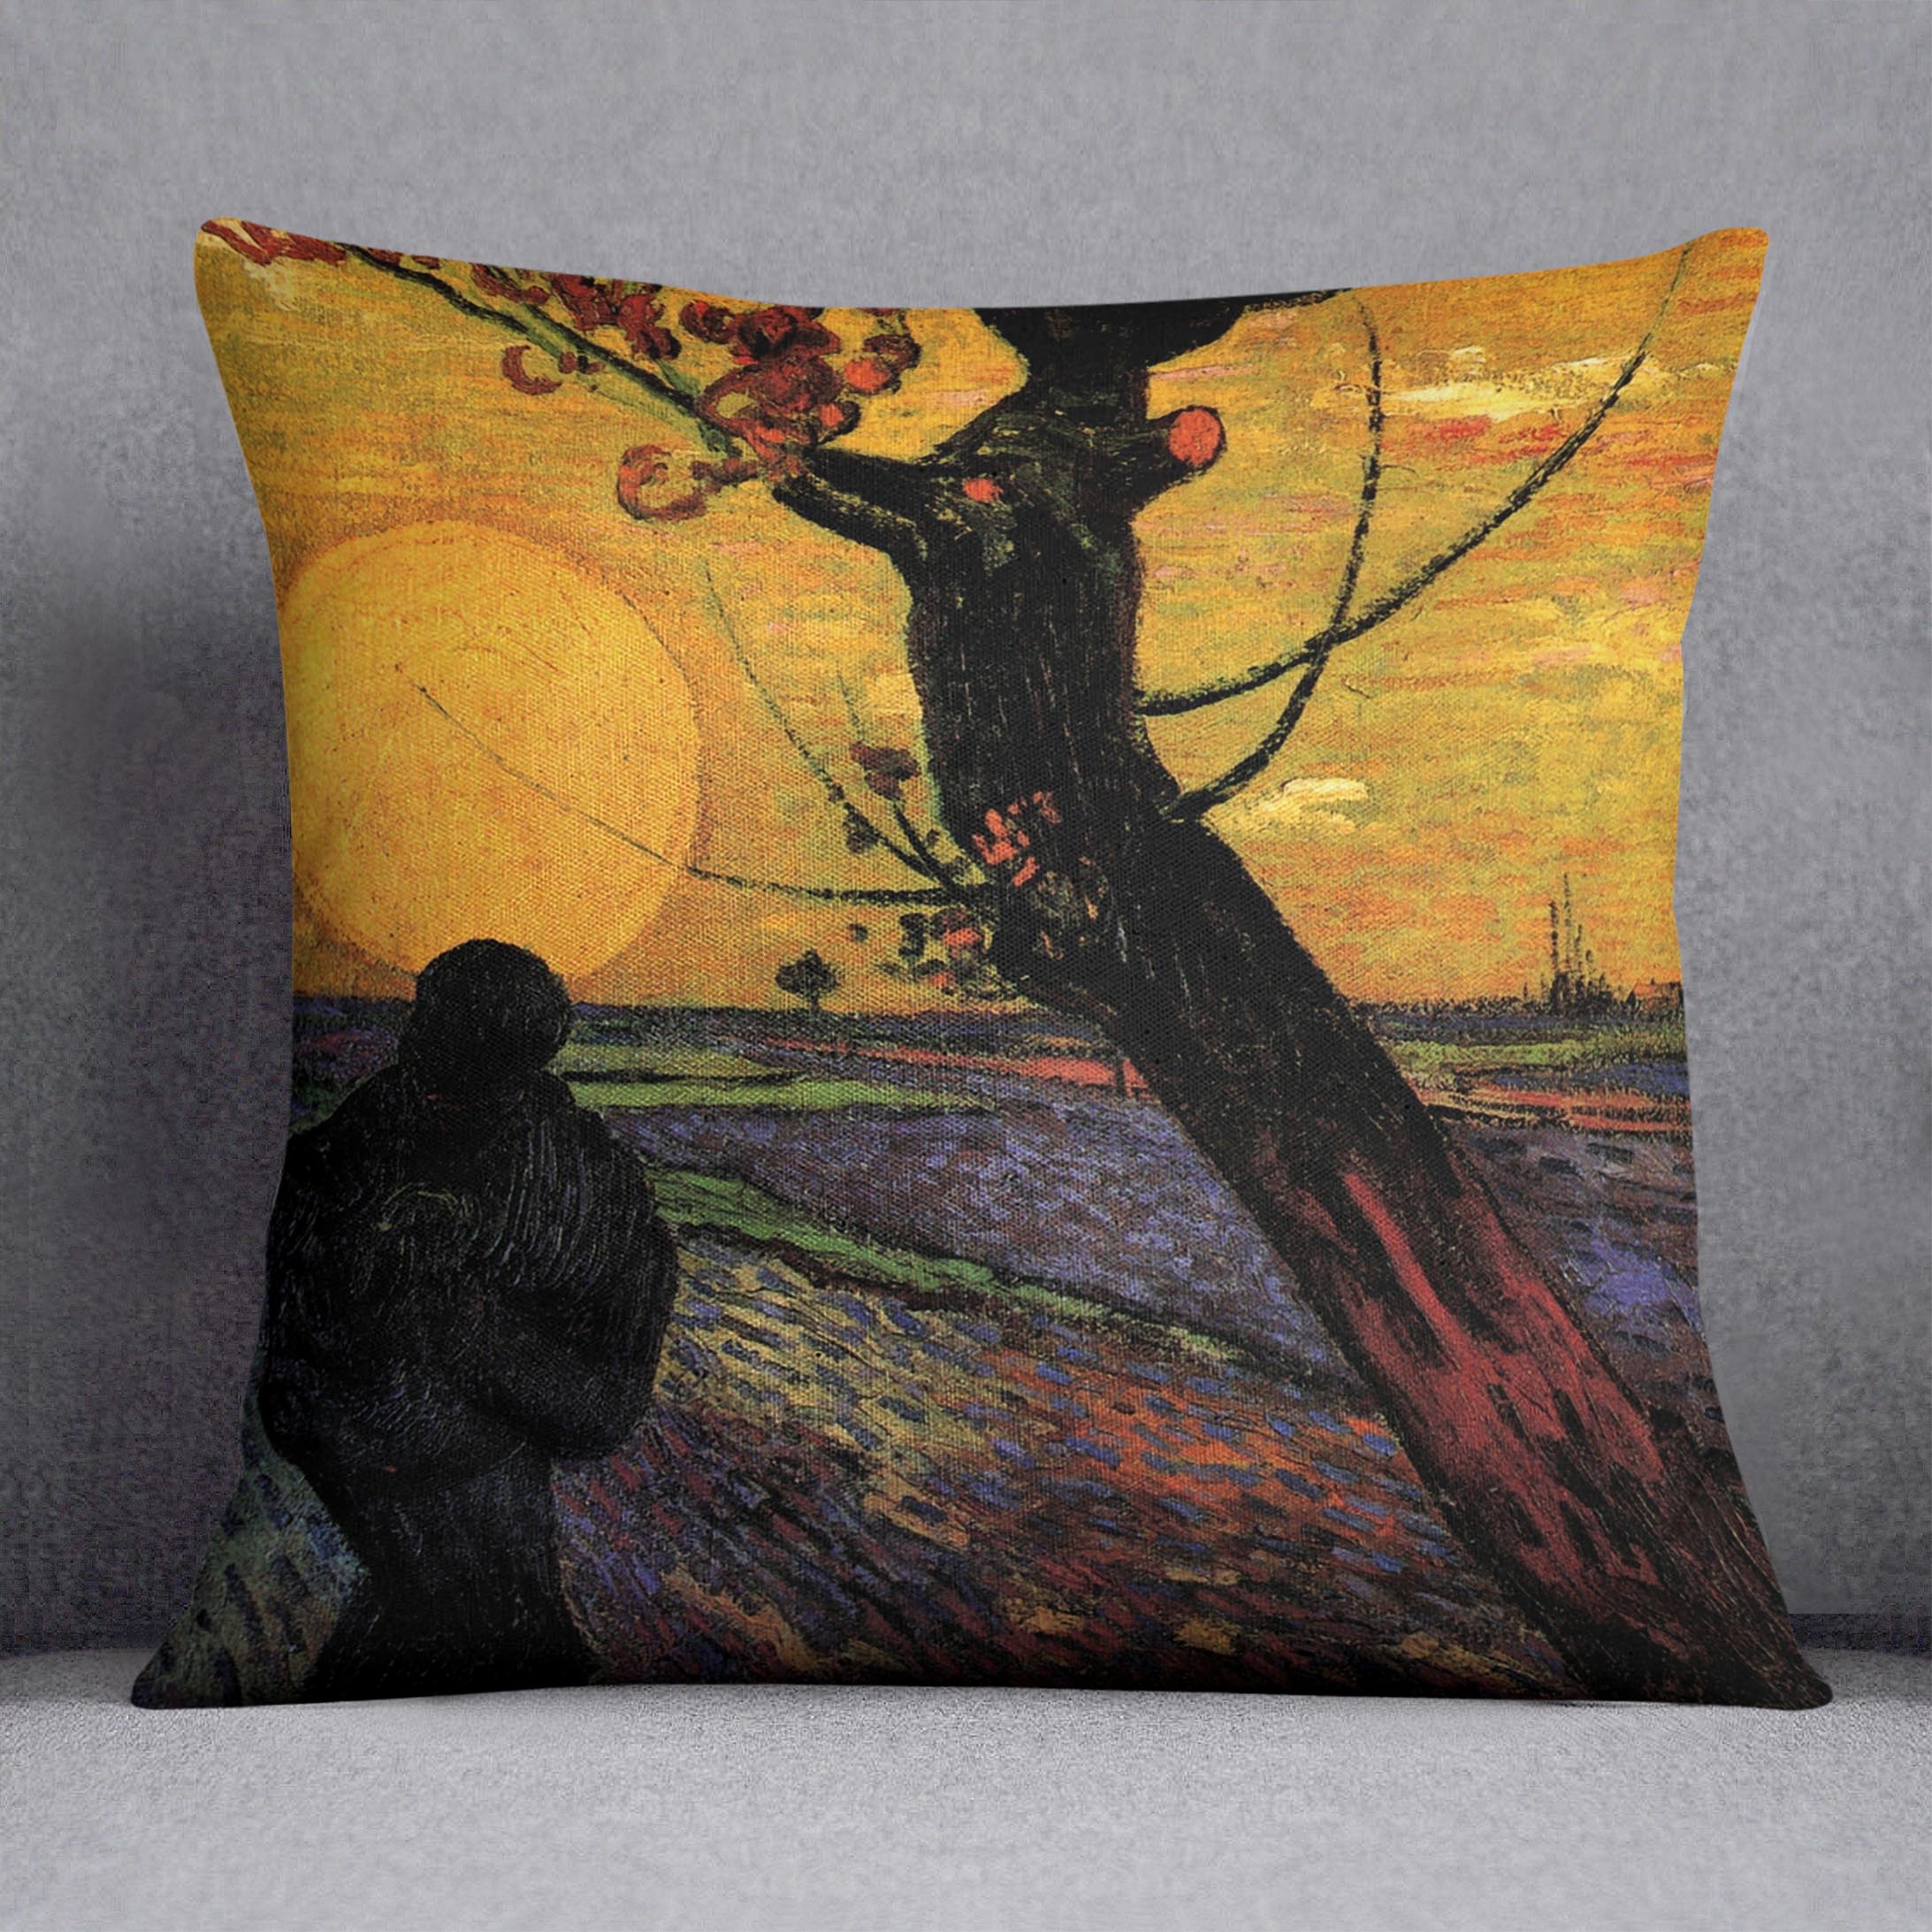 The Sower 2 by Van Gogh Cushion